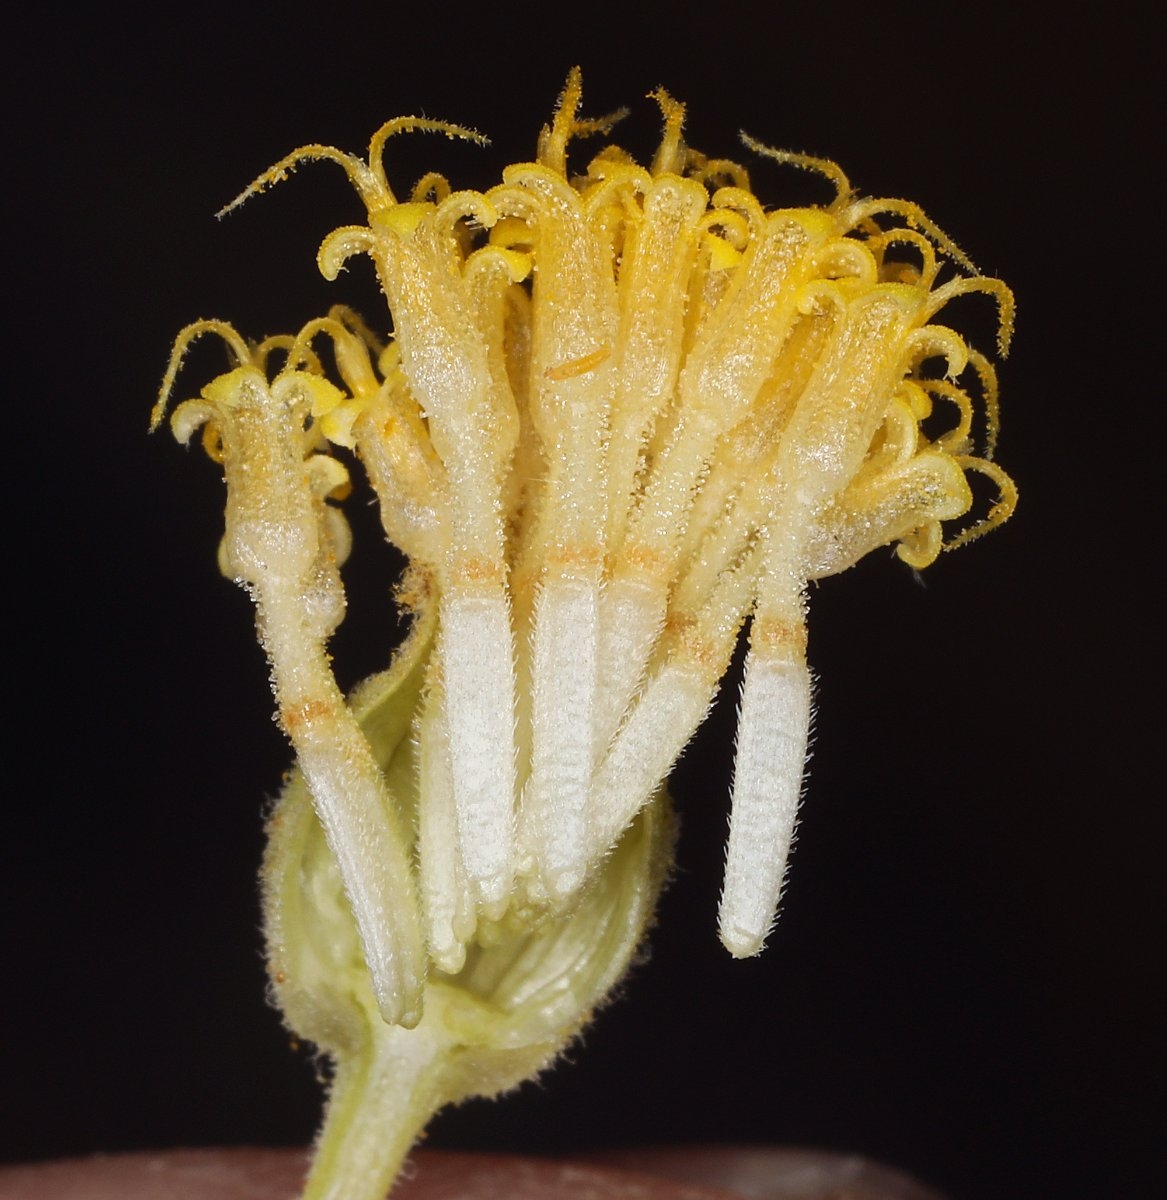 Perityle megalocephala